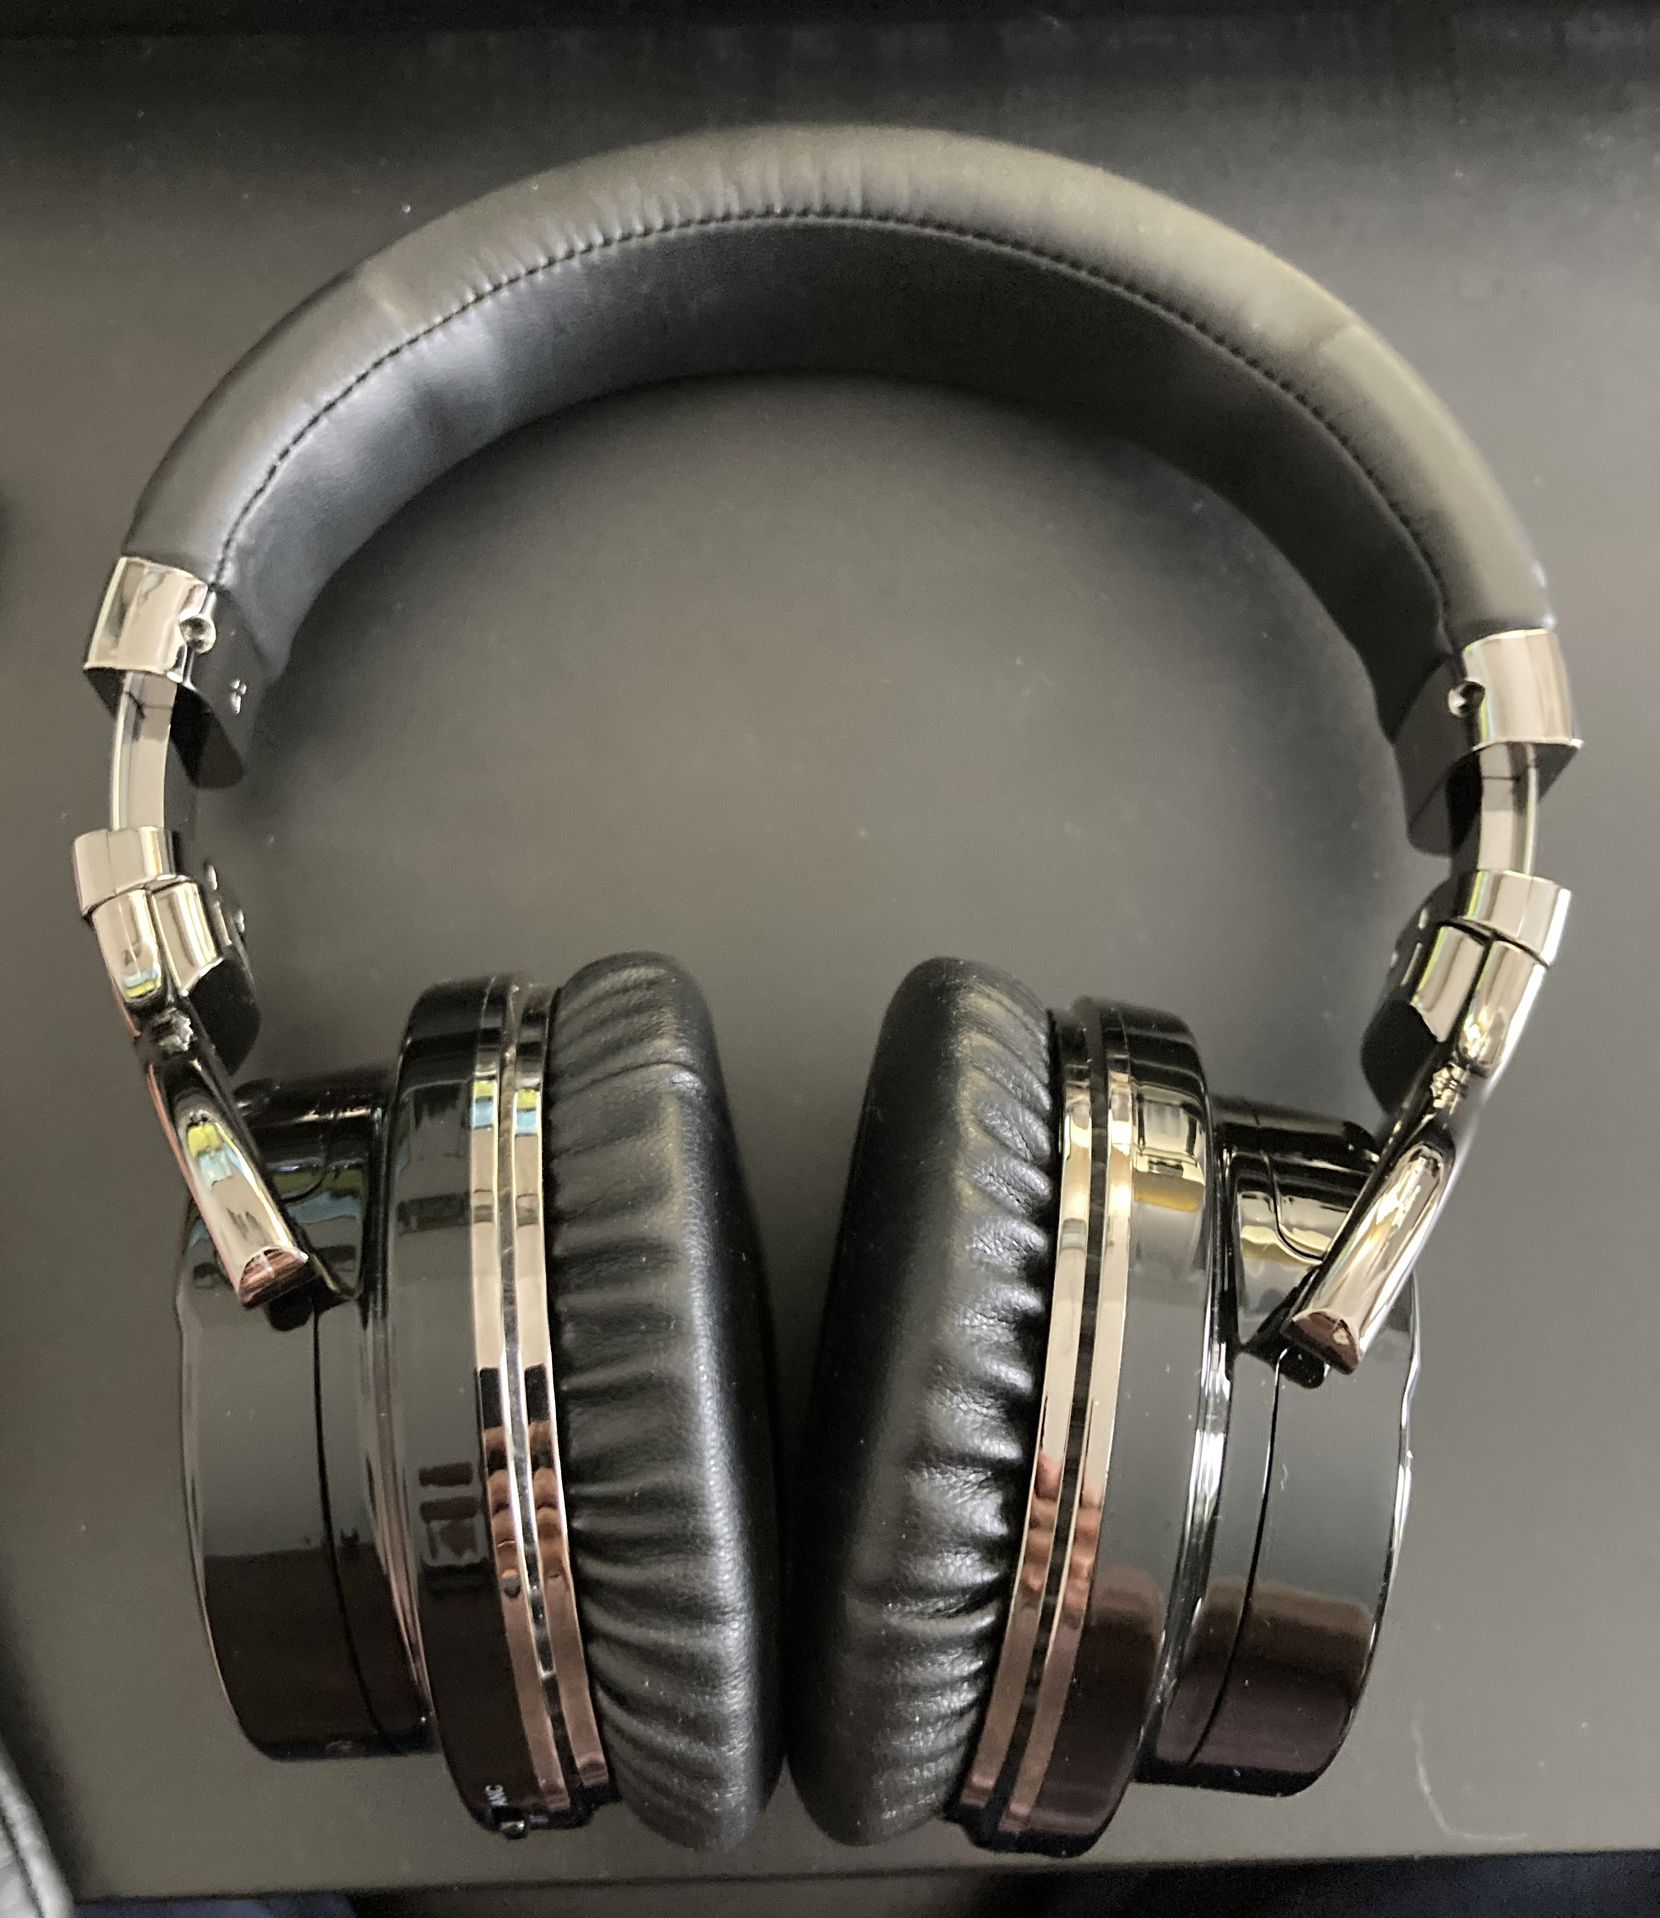  Cowin E7 Active Noise Cancelling Headphones